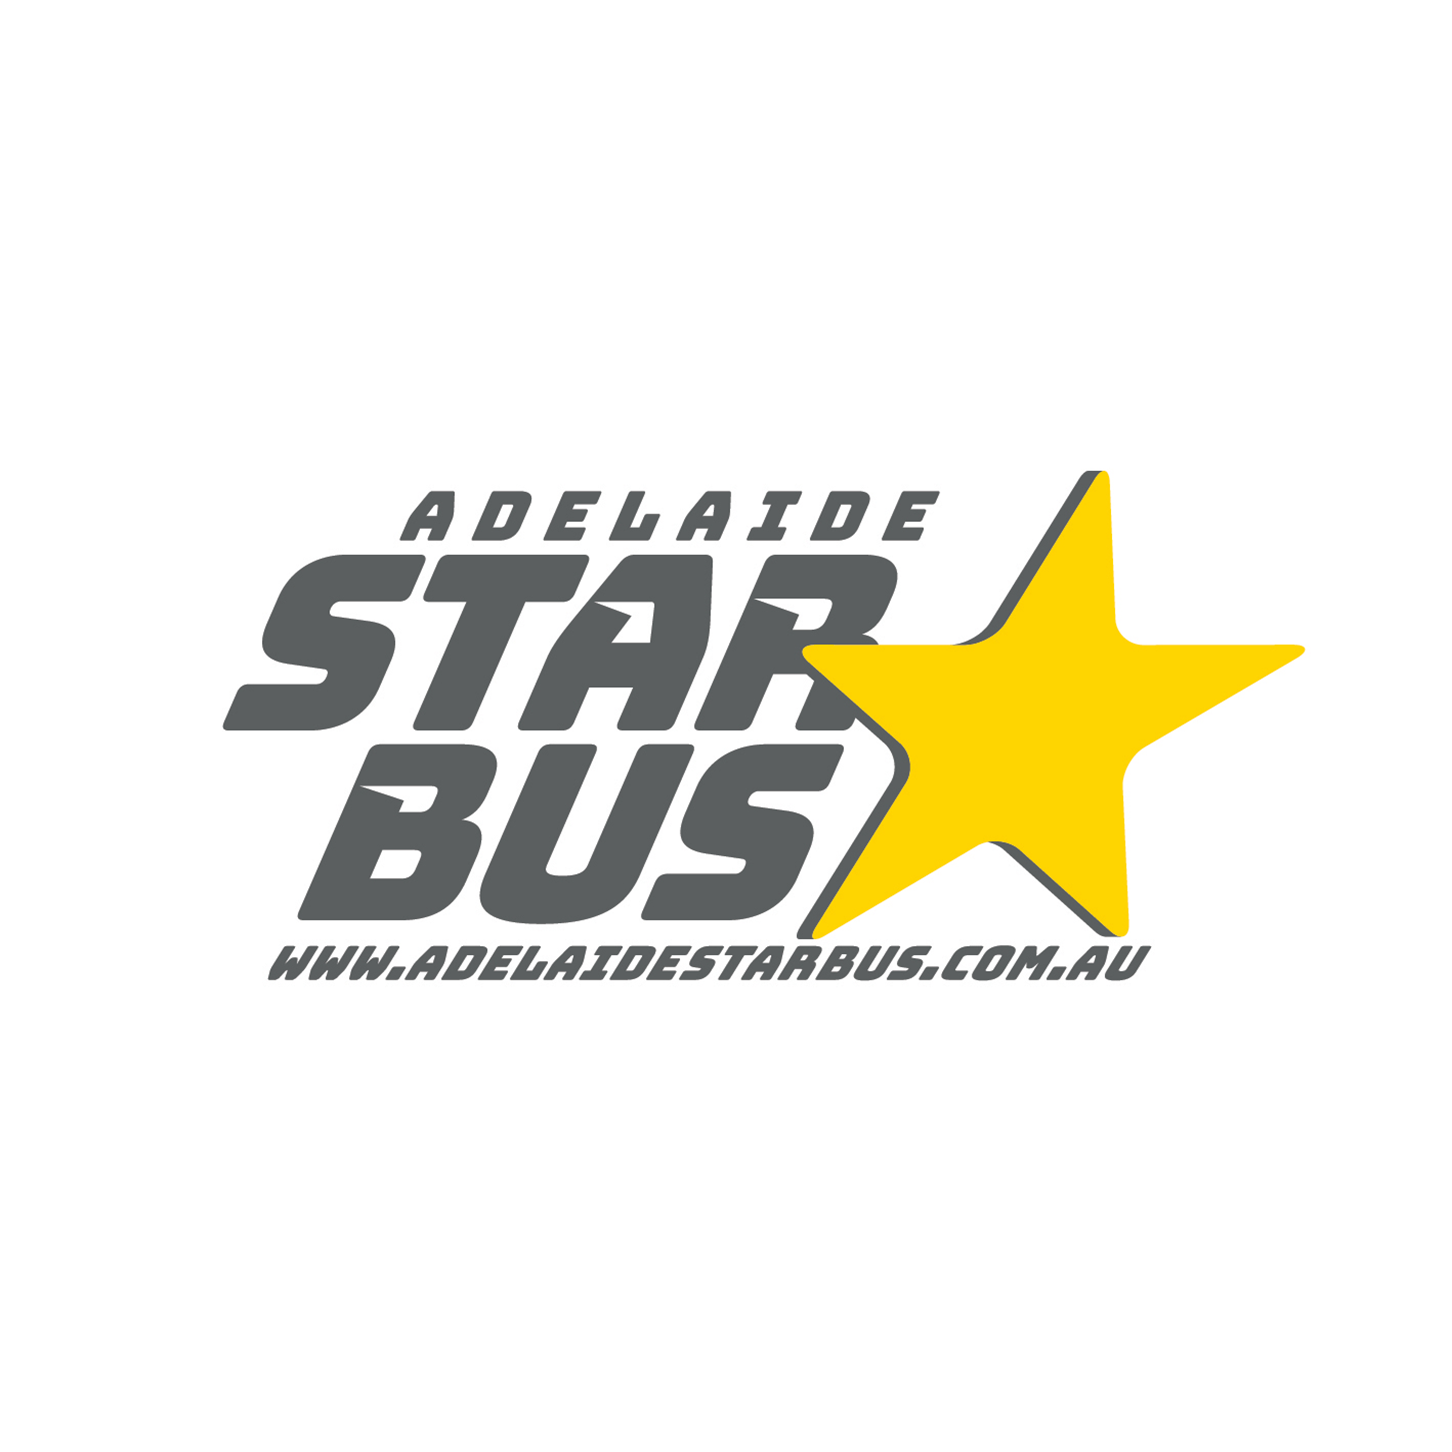 Adelaide Star Bus Company Logo